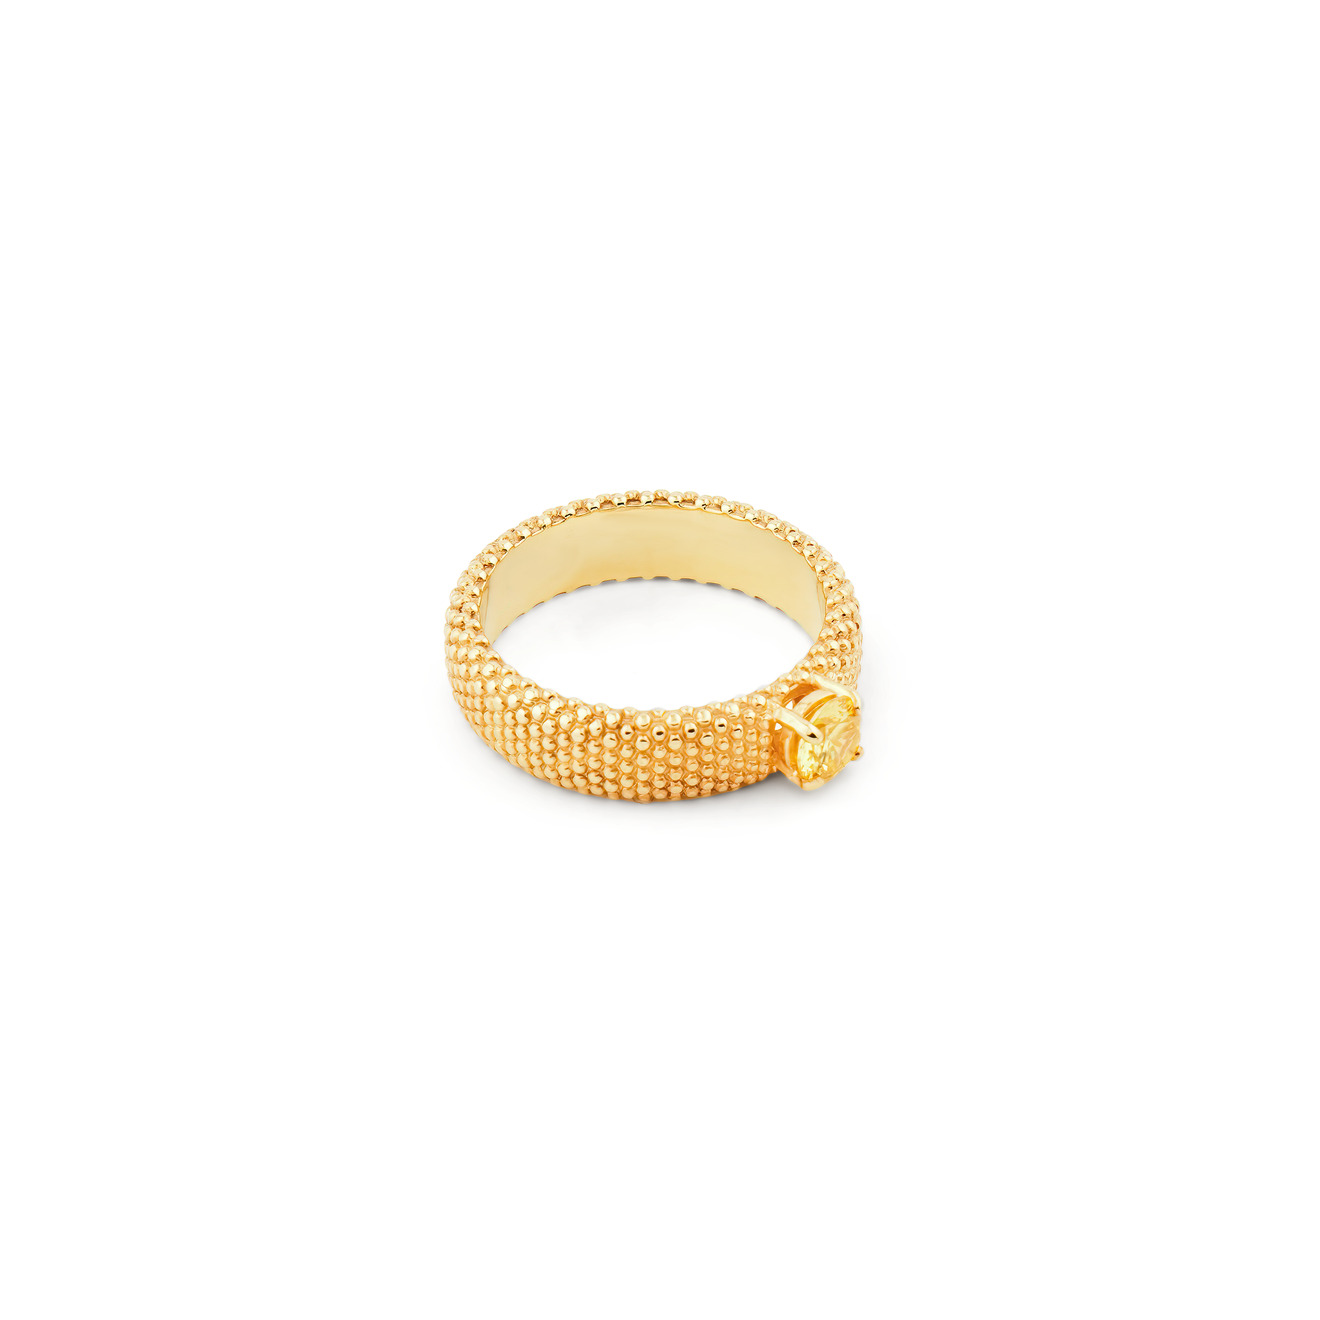 KRASHE jewellery Позолоченное кольцо «Золотые мурашки» с желтым фианитом позолоченное кольцо с мистик фианитом